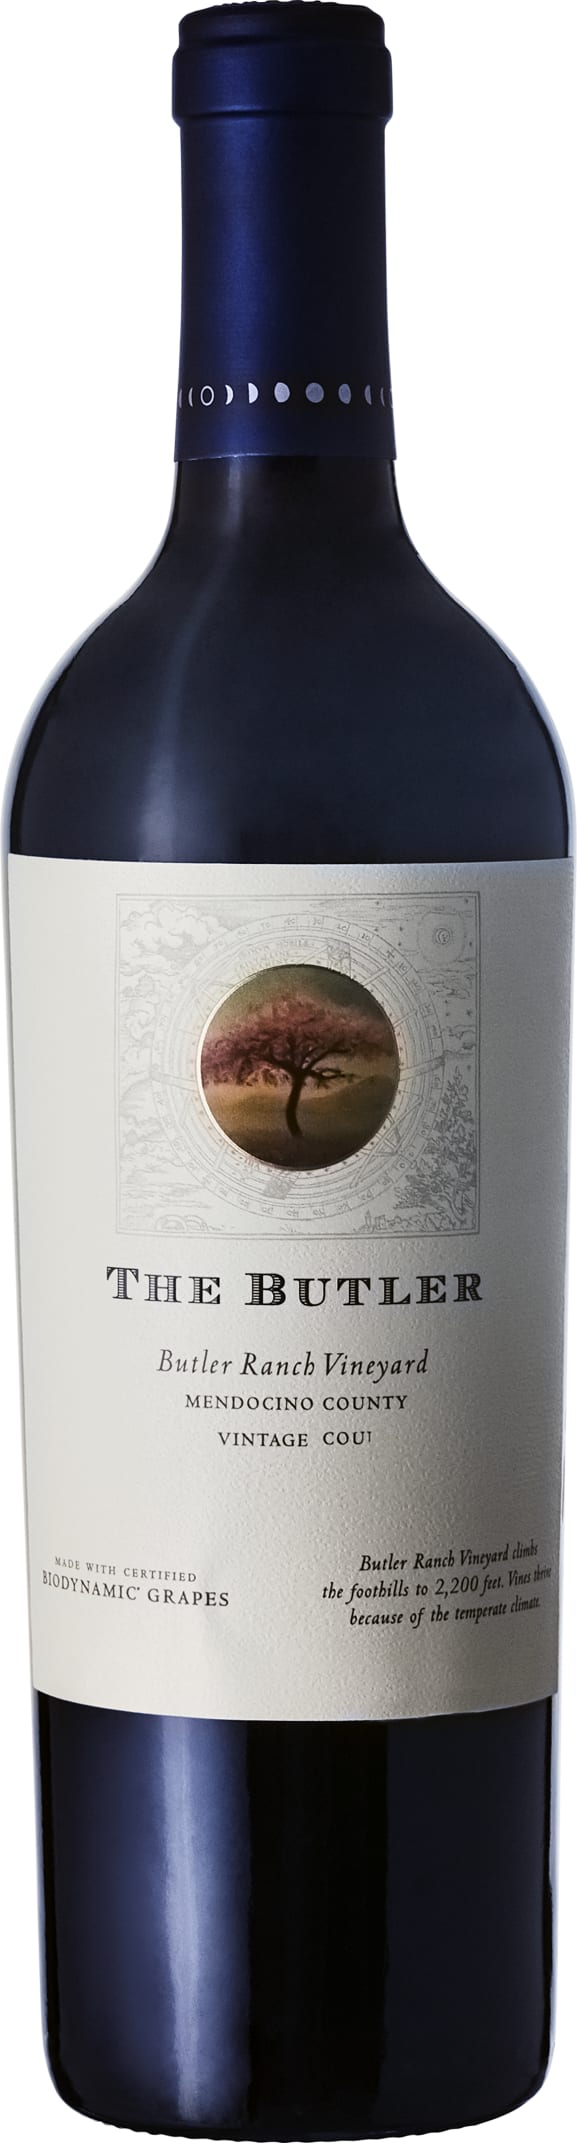 Bonterra The Butler Biodynamic Red 2016 75cl - Buy Bonterra Wines from GREAT WINES DIRECT wine shop